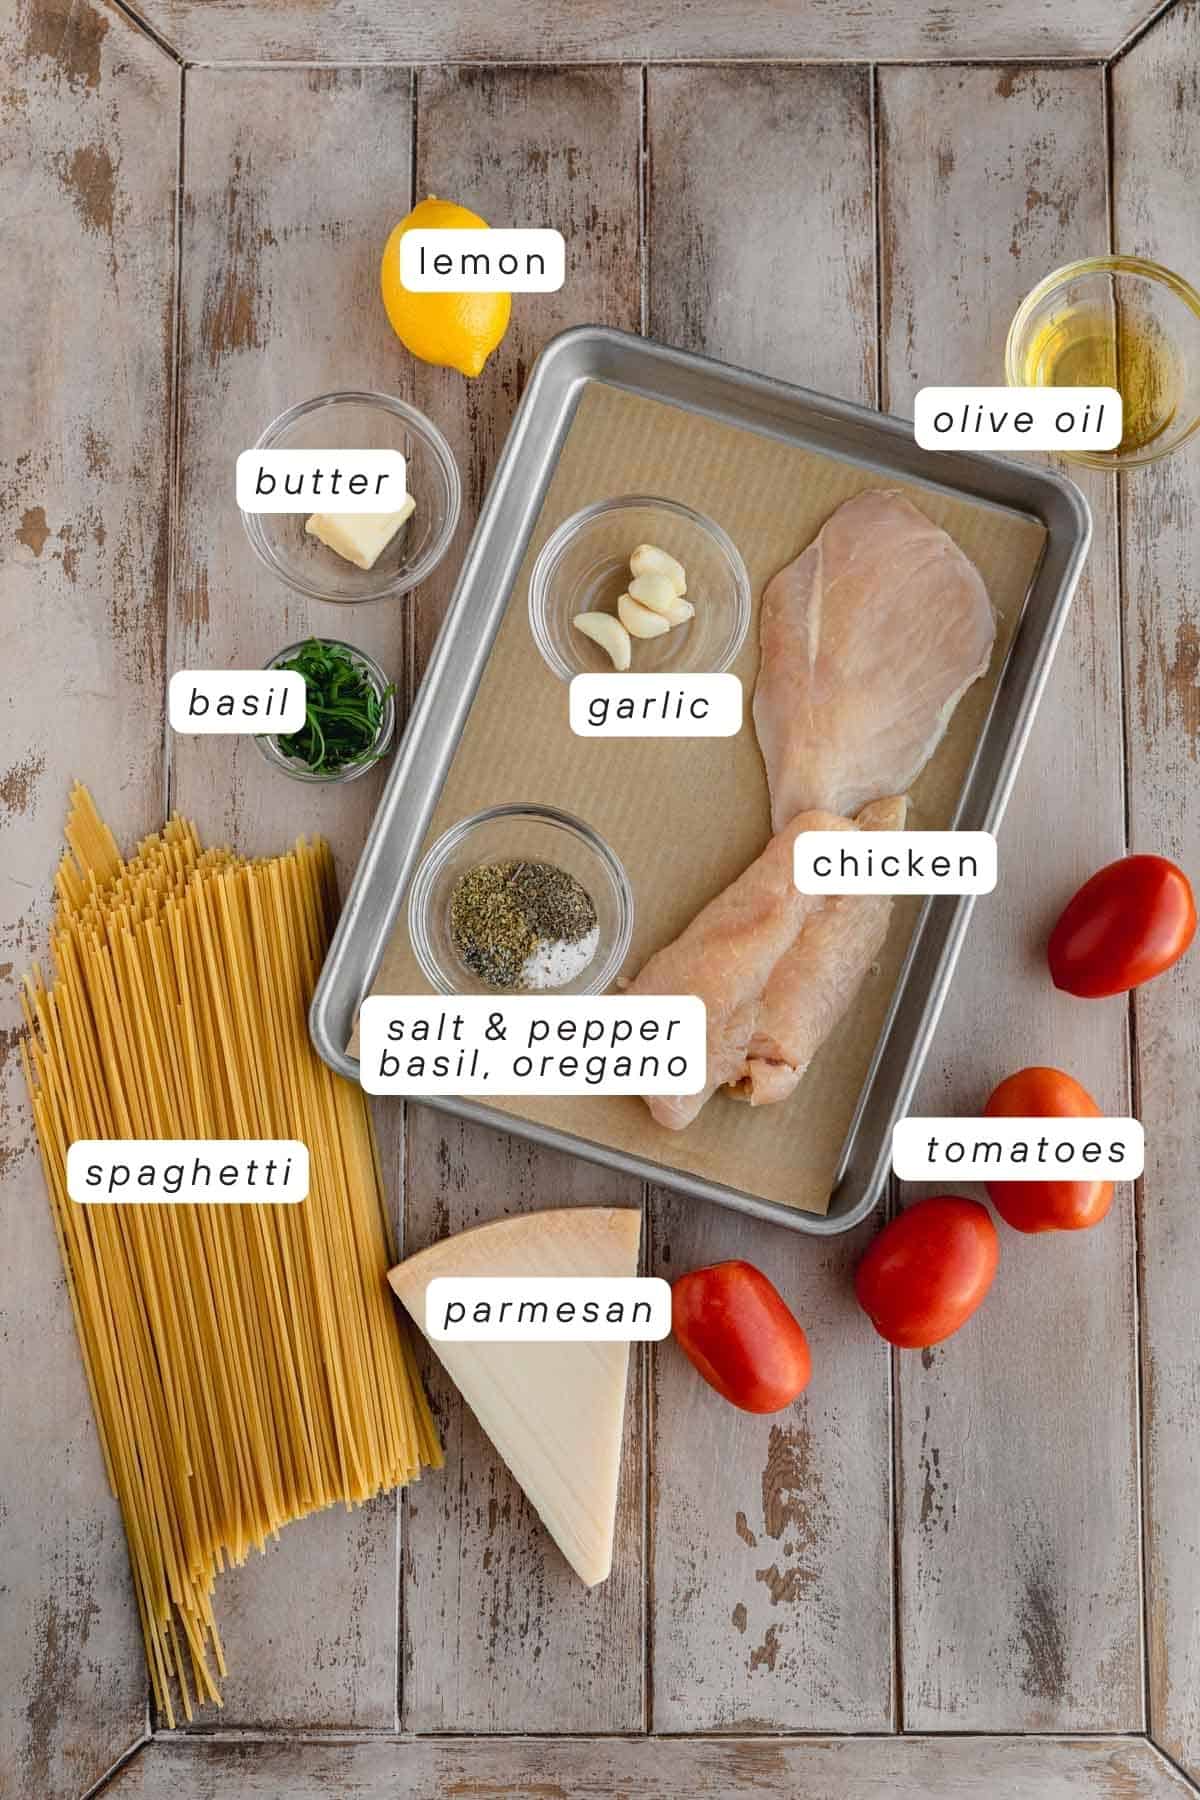 Spaghetti, garlic, parmesan, tomatoes, lemon, basil, salt, pepper, chicken, oregano, olive oil.